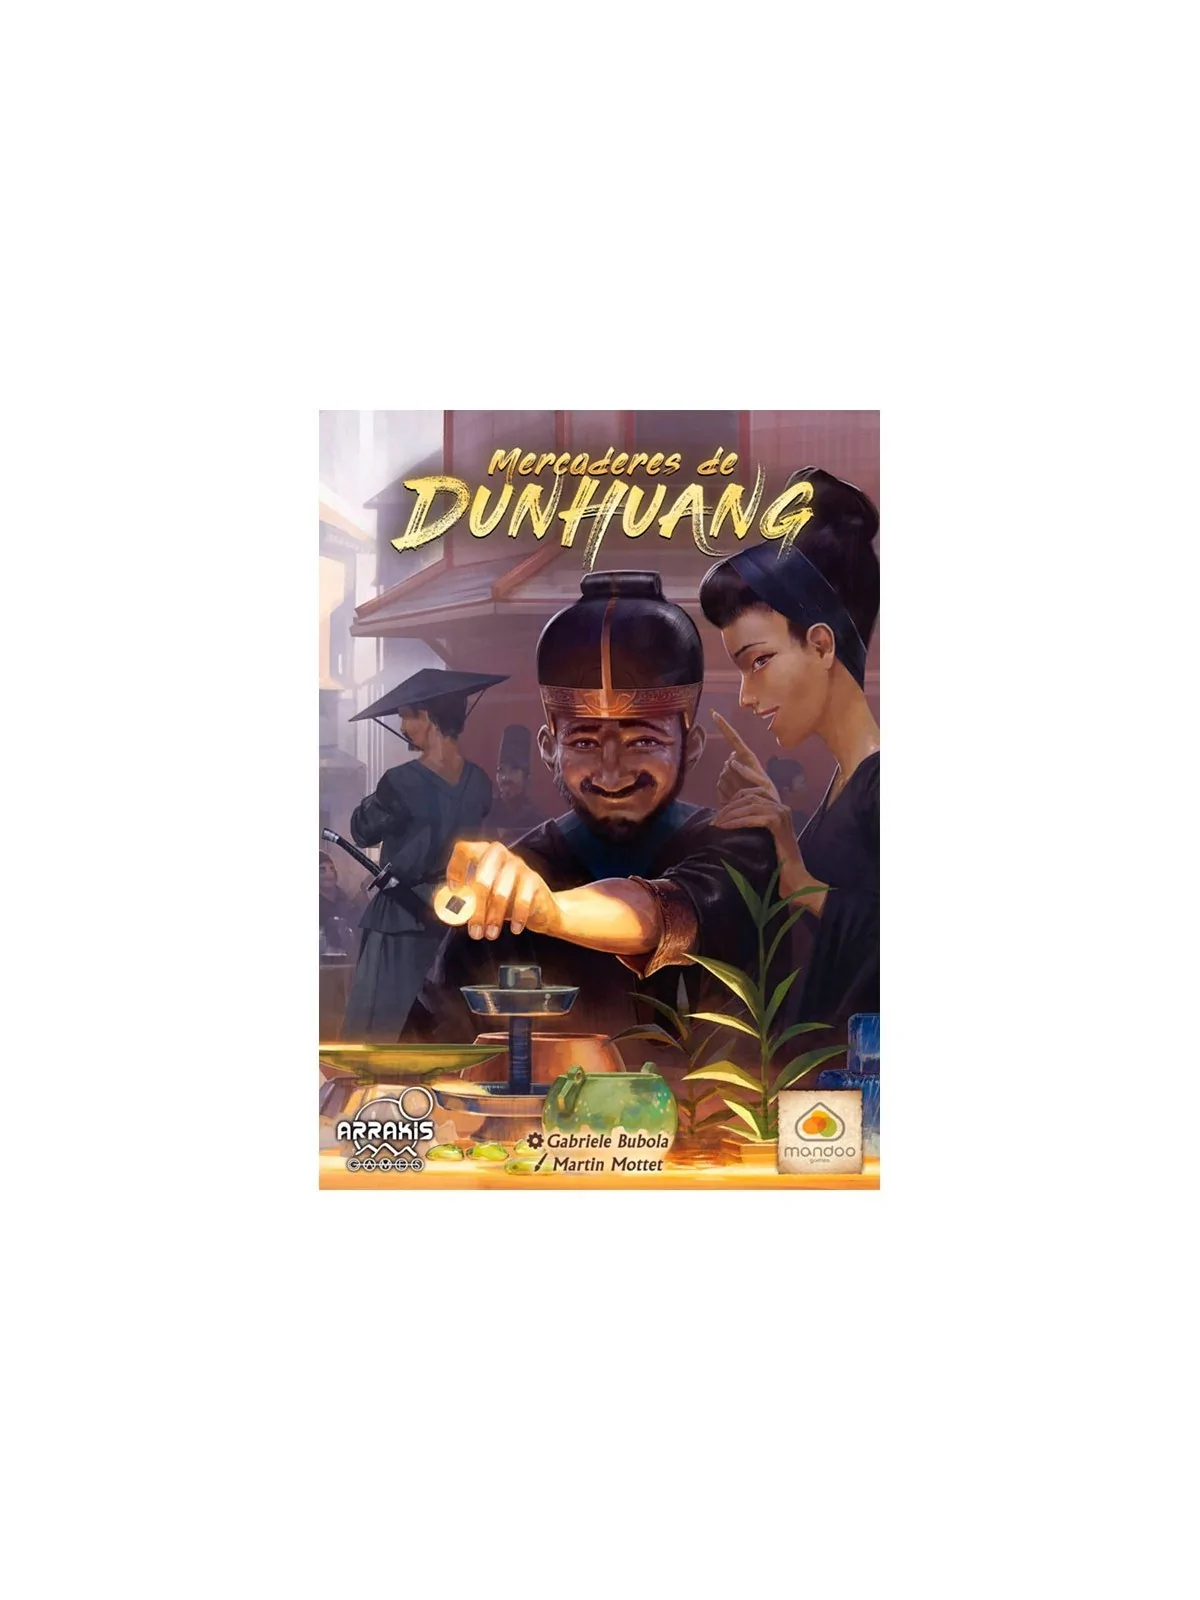 Comprar Mercaderes de Dunhuang barato al mejor precio 17,95 € de Arrak